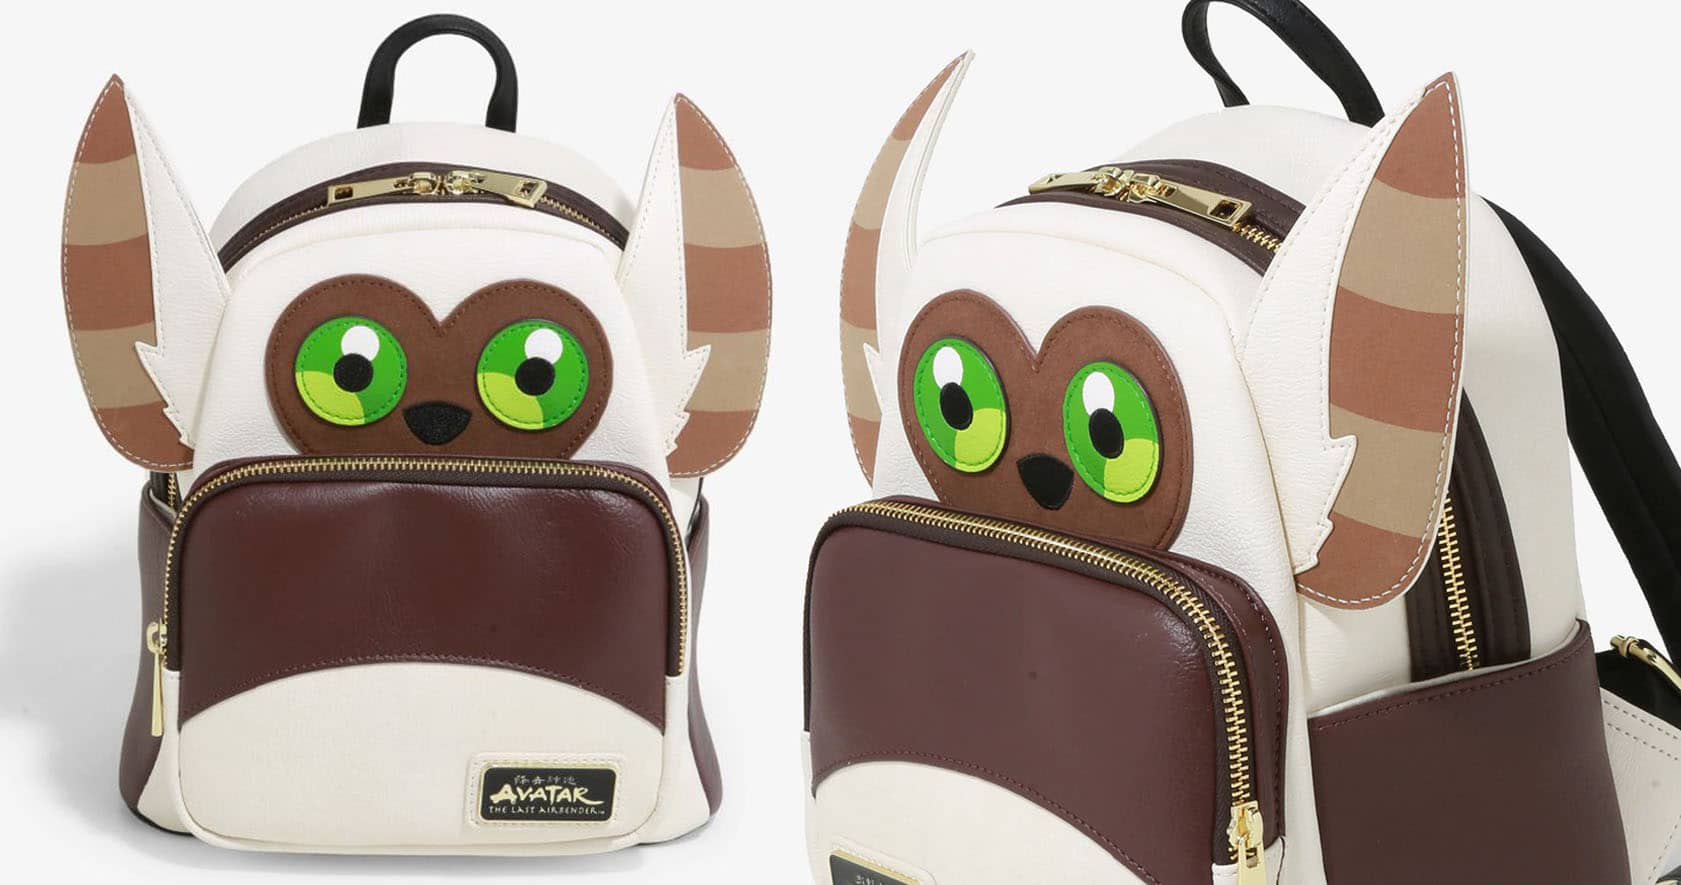 Avatar Momo Backpack